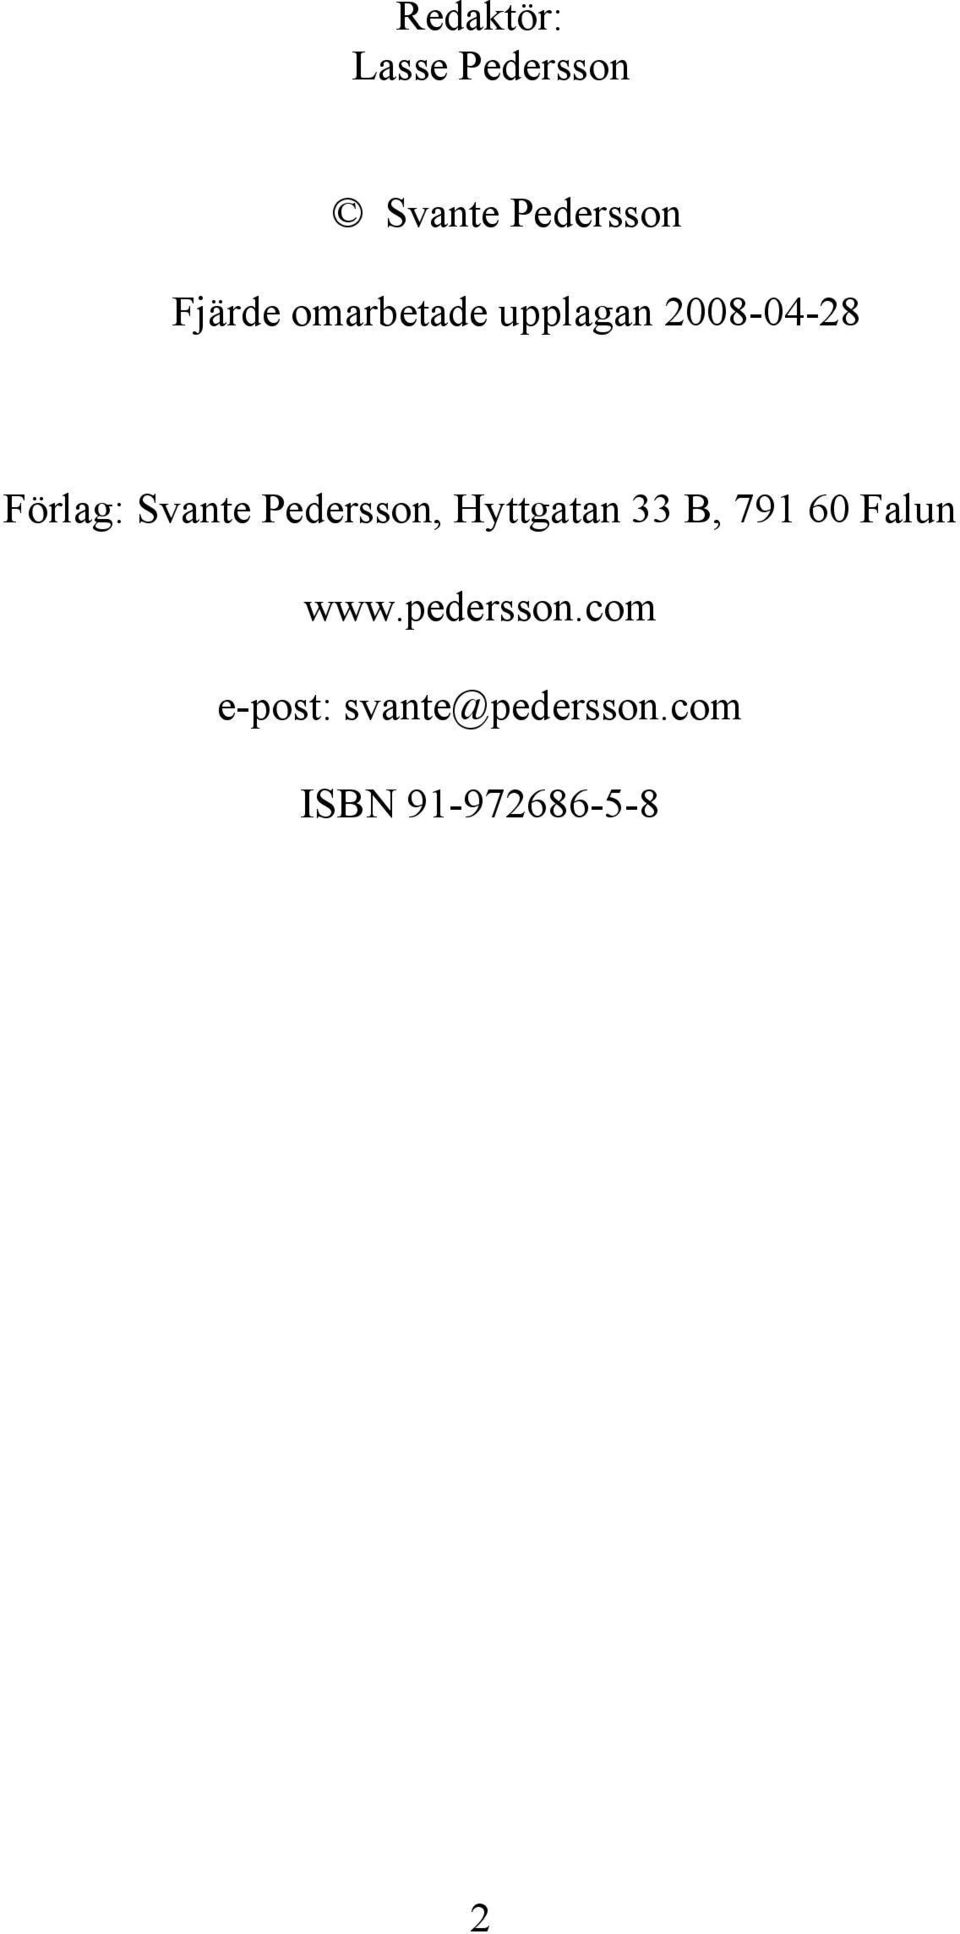 Pedersson, Hyttgatan 33 B, 791 60 Falun www.